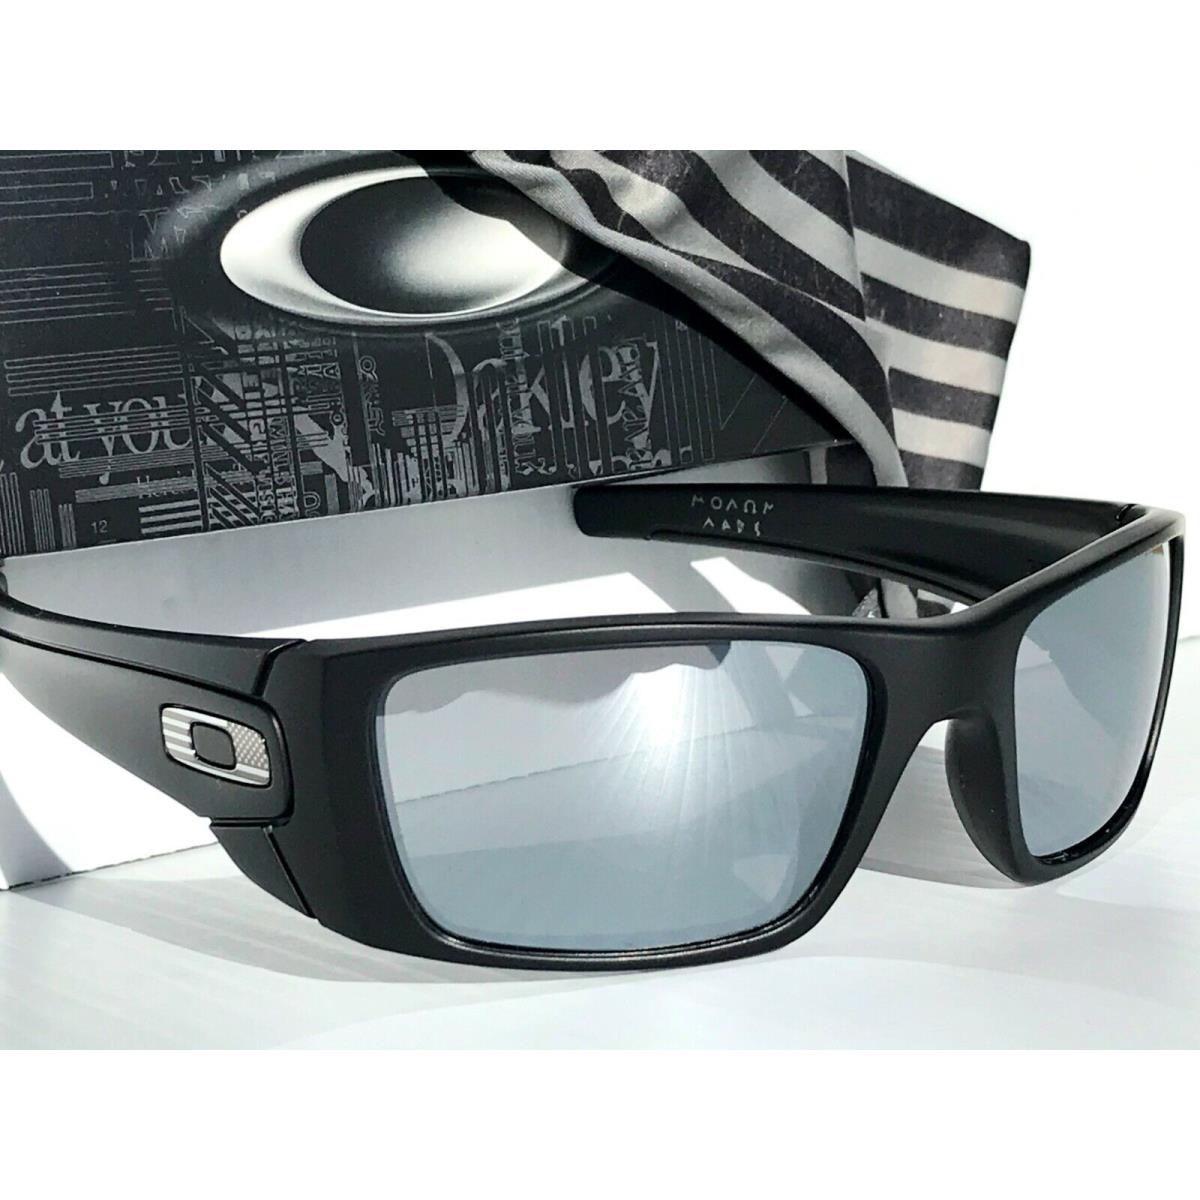 Oakley sunglasses Fuel Cell - Black Frame, Silver Lens 8